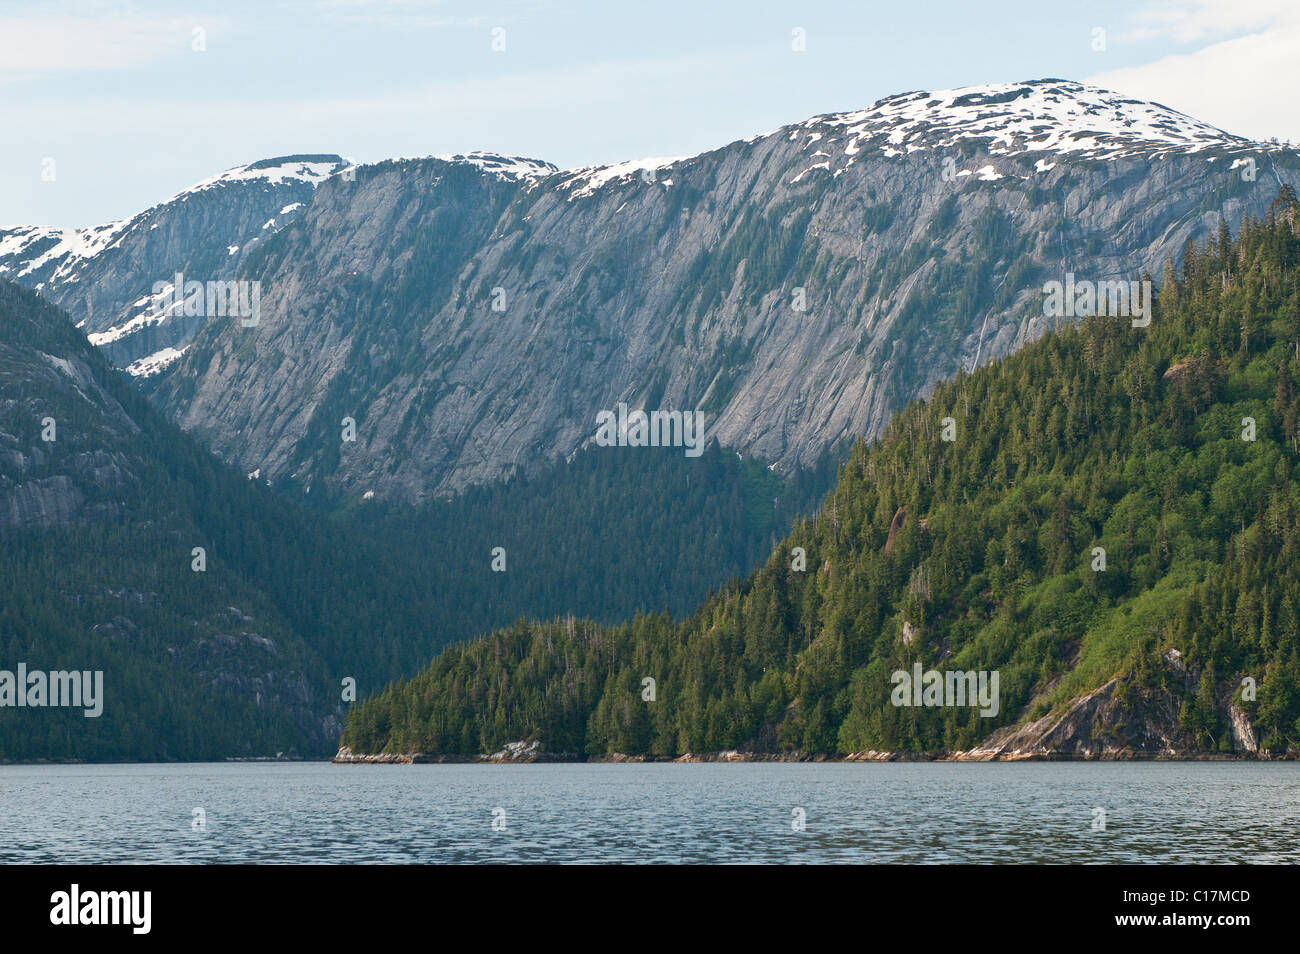 Alaska. Walker Cove area of Misty Fjords National Monument Wilderness Area, Southeast Alaska. Stock Photo